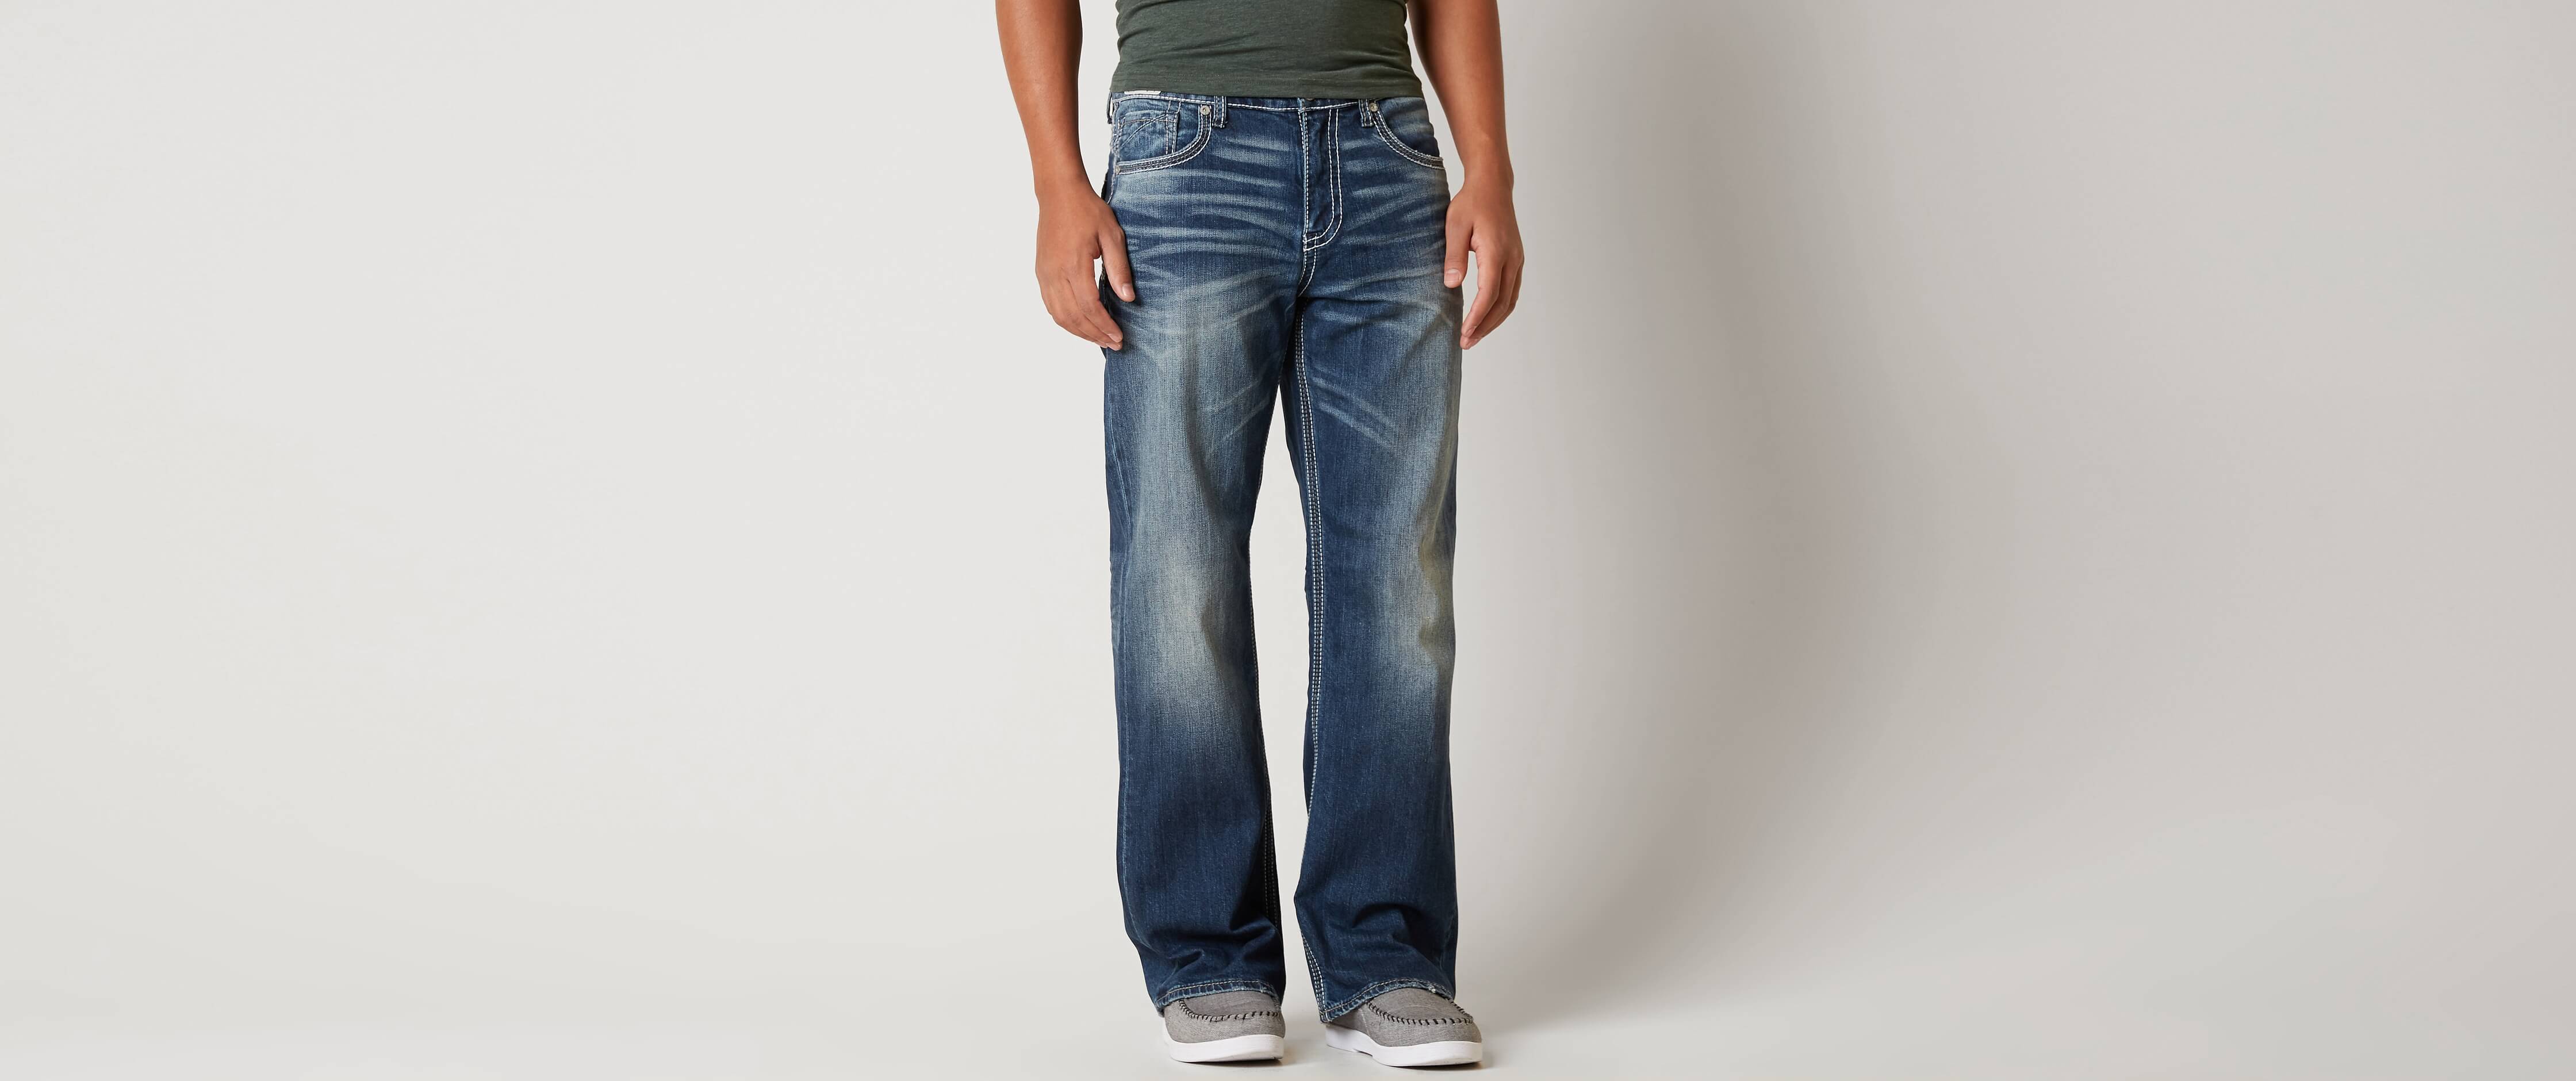 size 29 bke jeans conversion